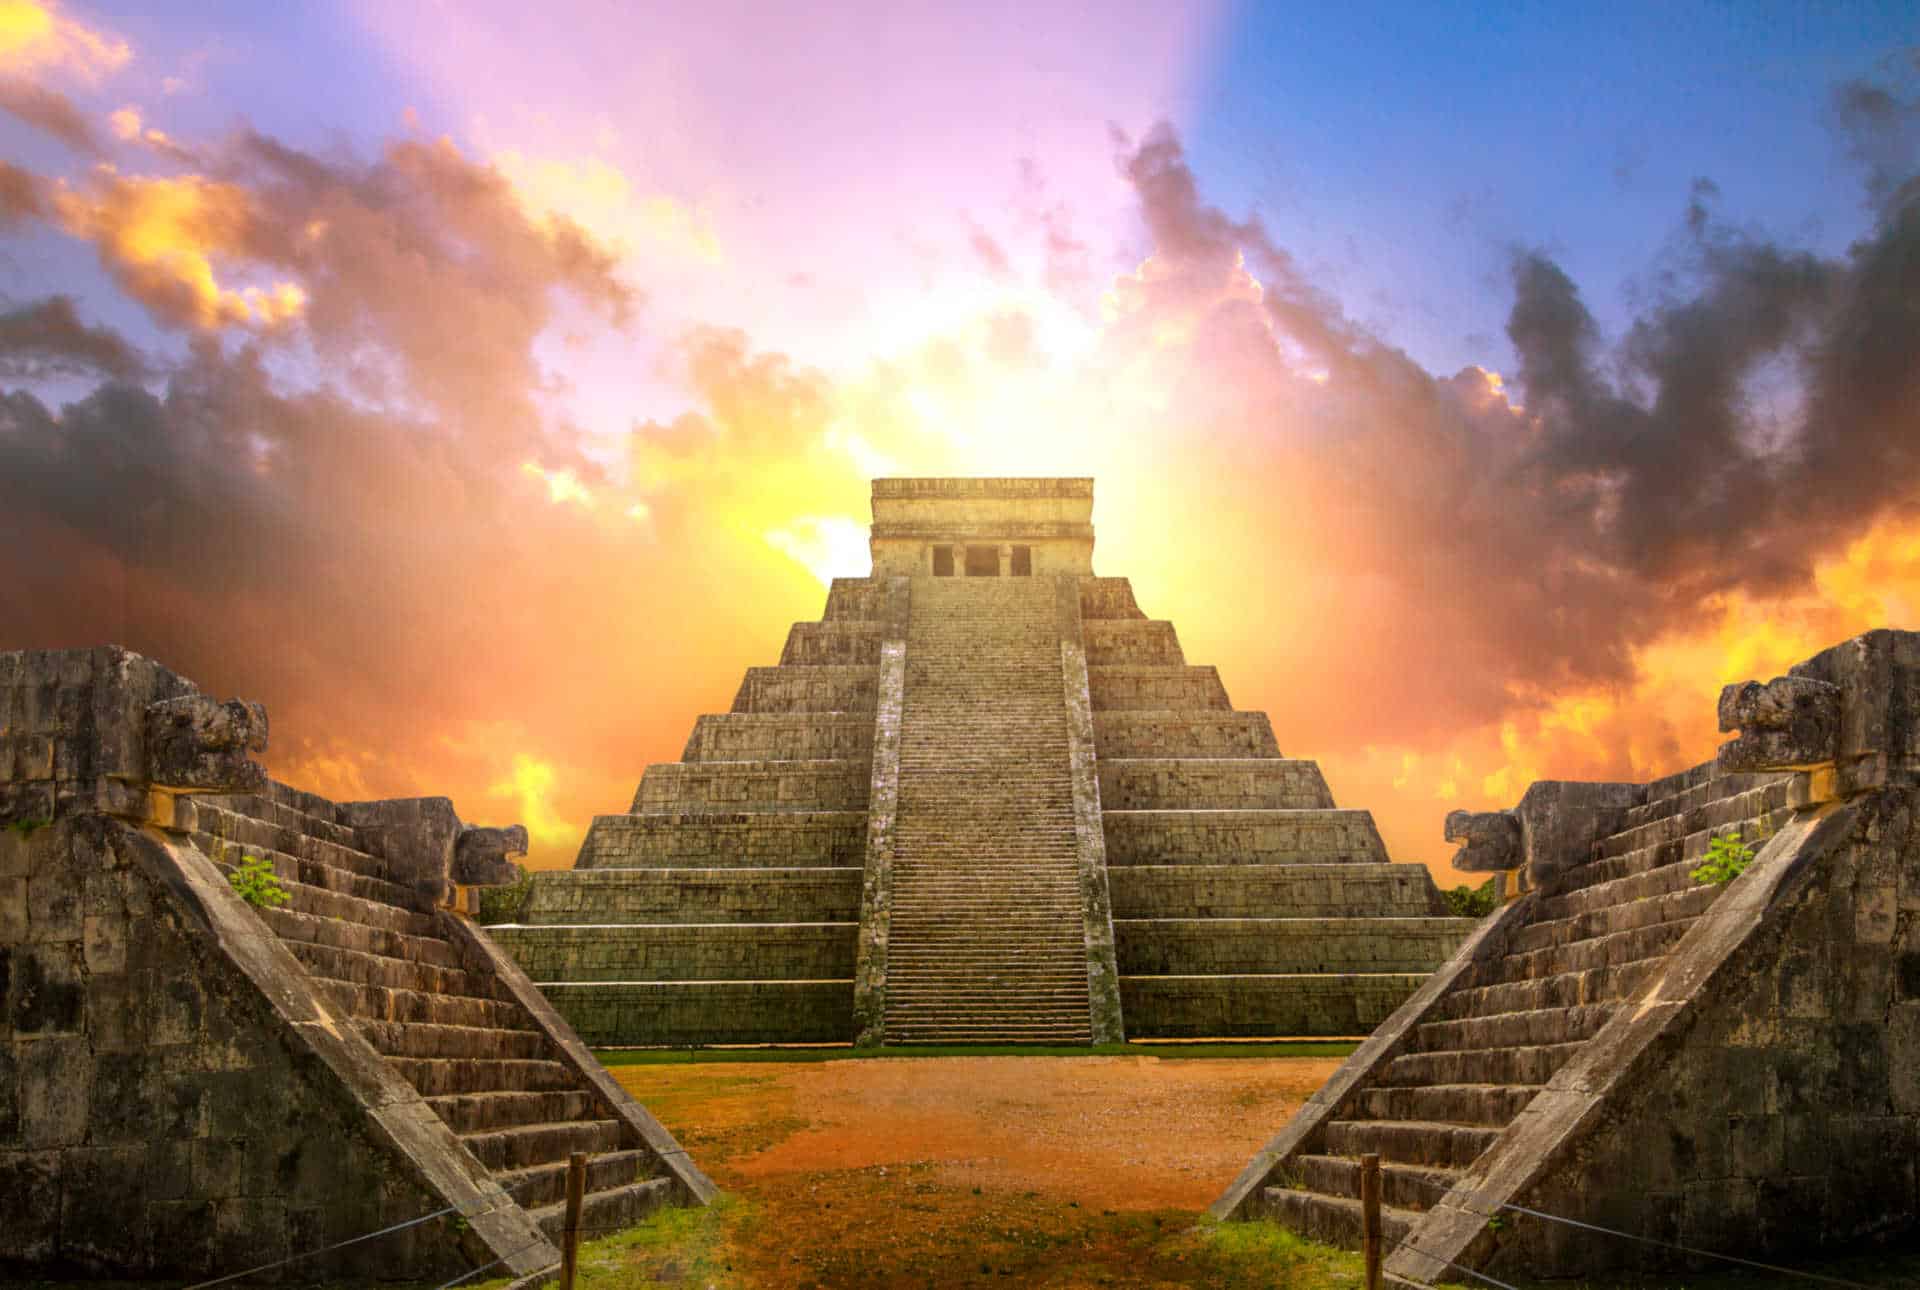 Short travel advisory to the ancient Mayan city of Chichen Itza, Mexico